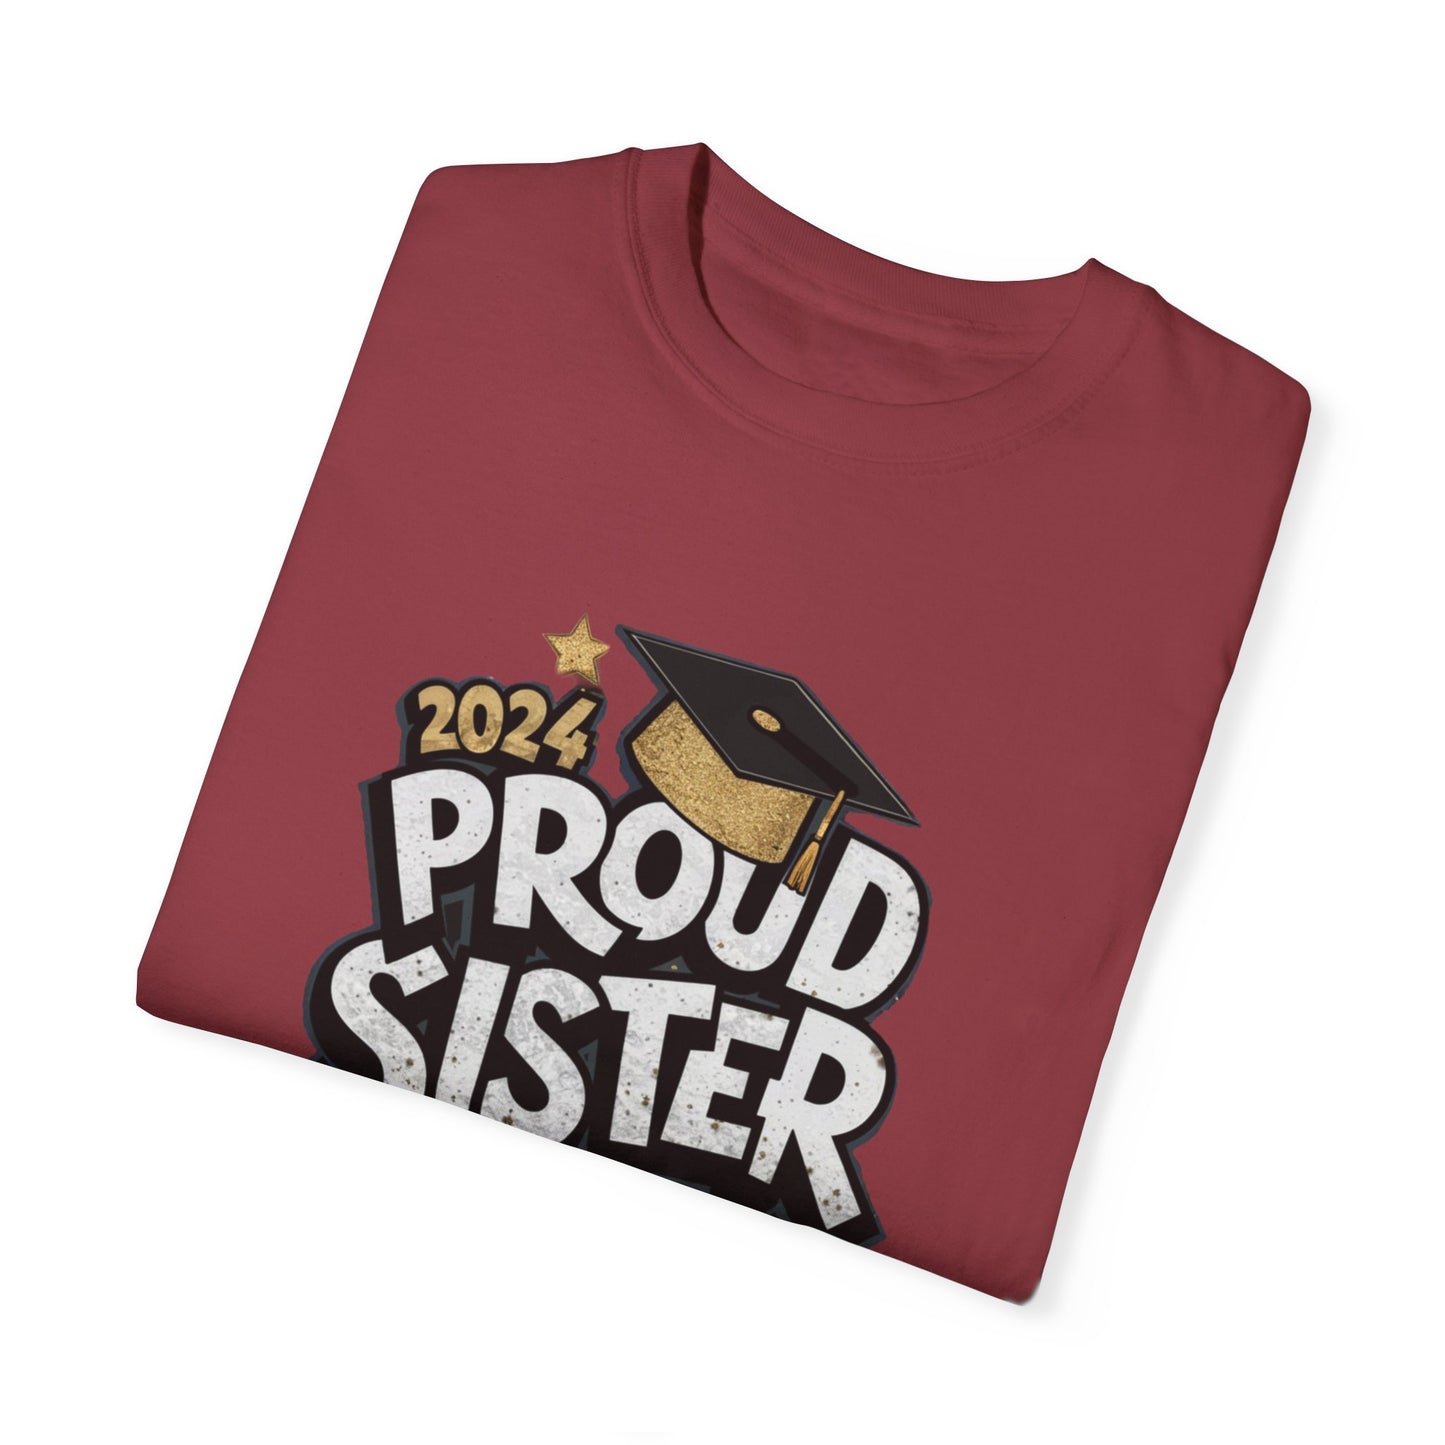 Proud Sister of a 2024 Graduate Unisex Garment-dyed T-shirt Cotton Funny Humorous Graphic Soft Premium Unisex Men Women Chili T-shirt Birthday Gift-35